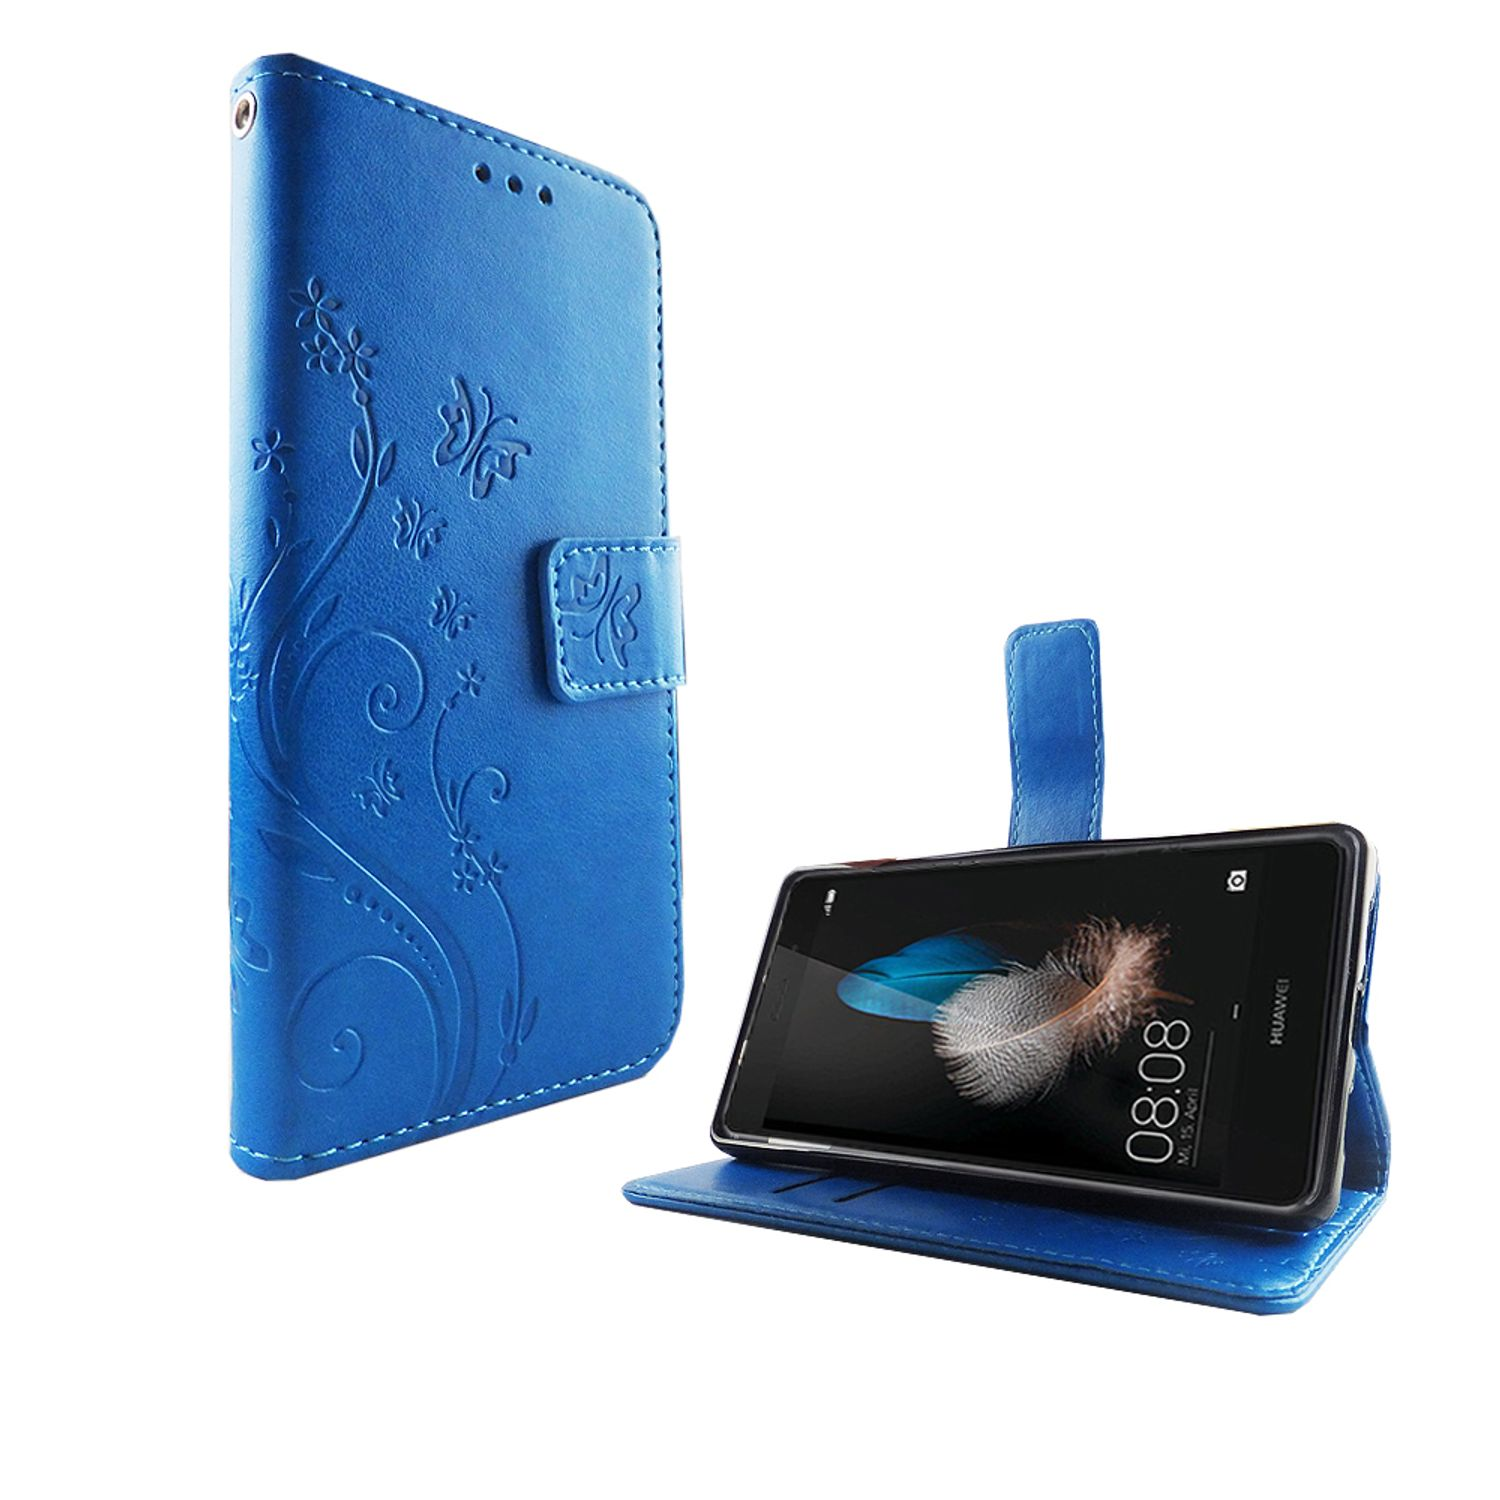 Blau Huawei, P8 Schutzhülle, Lite, KÖNIG DESIGN Bookcover,